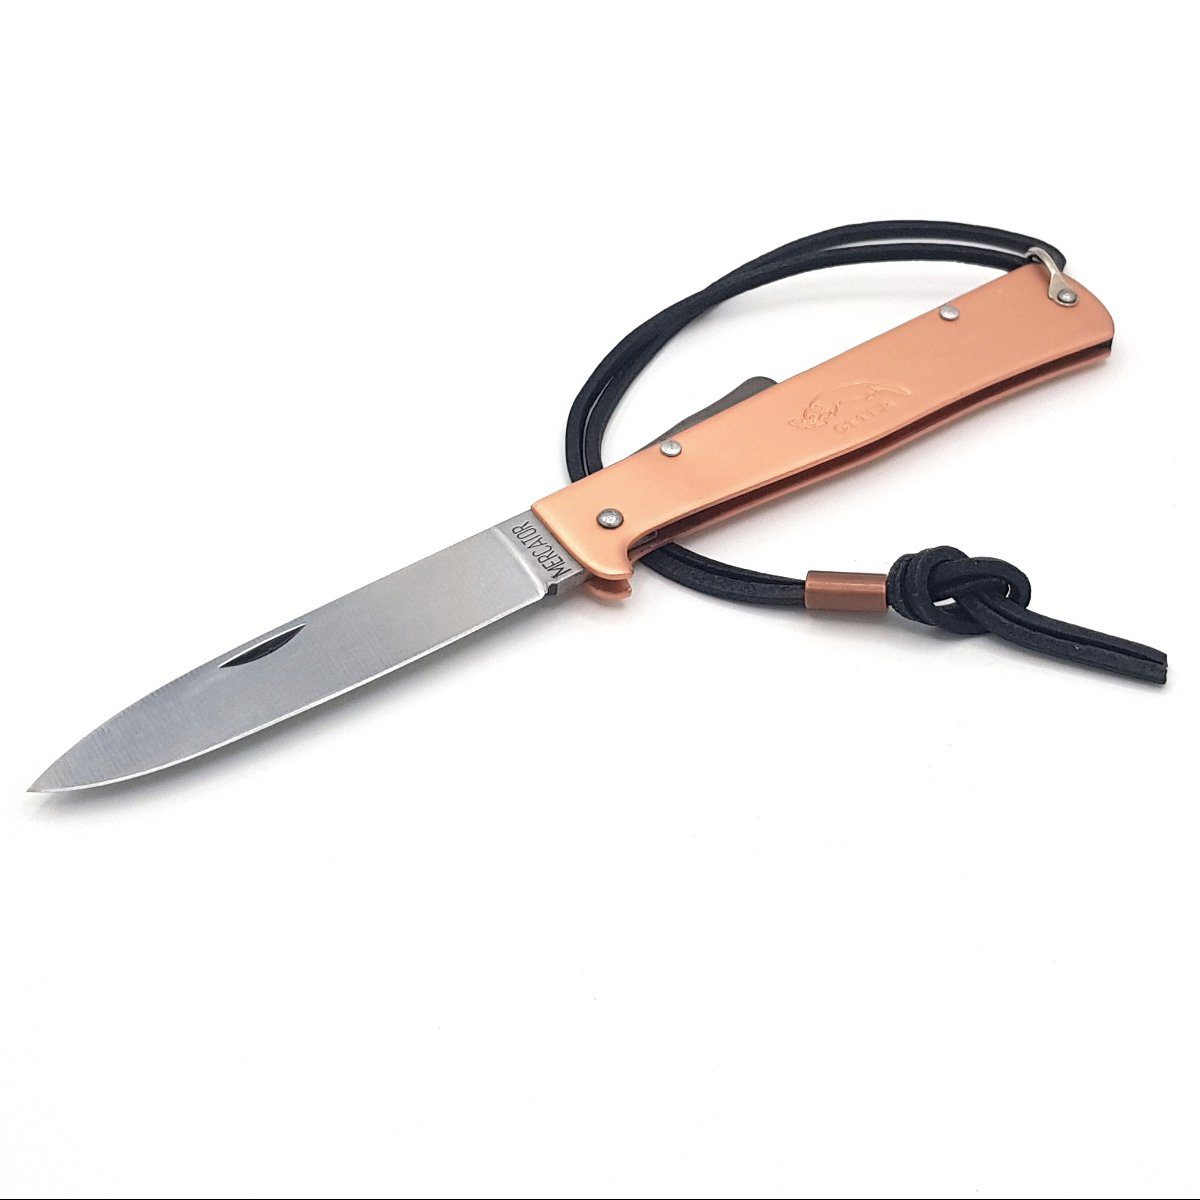 Messer Taschenmesser Kupfer Klinge Lederband, Backlock groß Carbonstahl, mit Mercator-Messer Otter